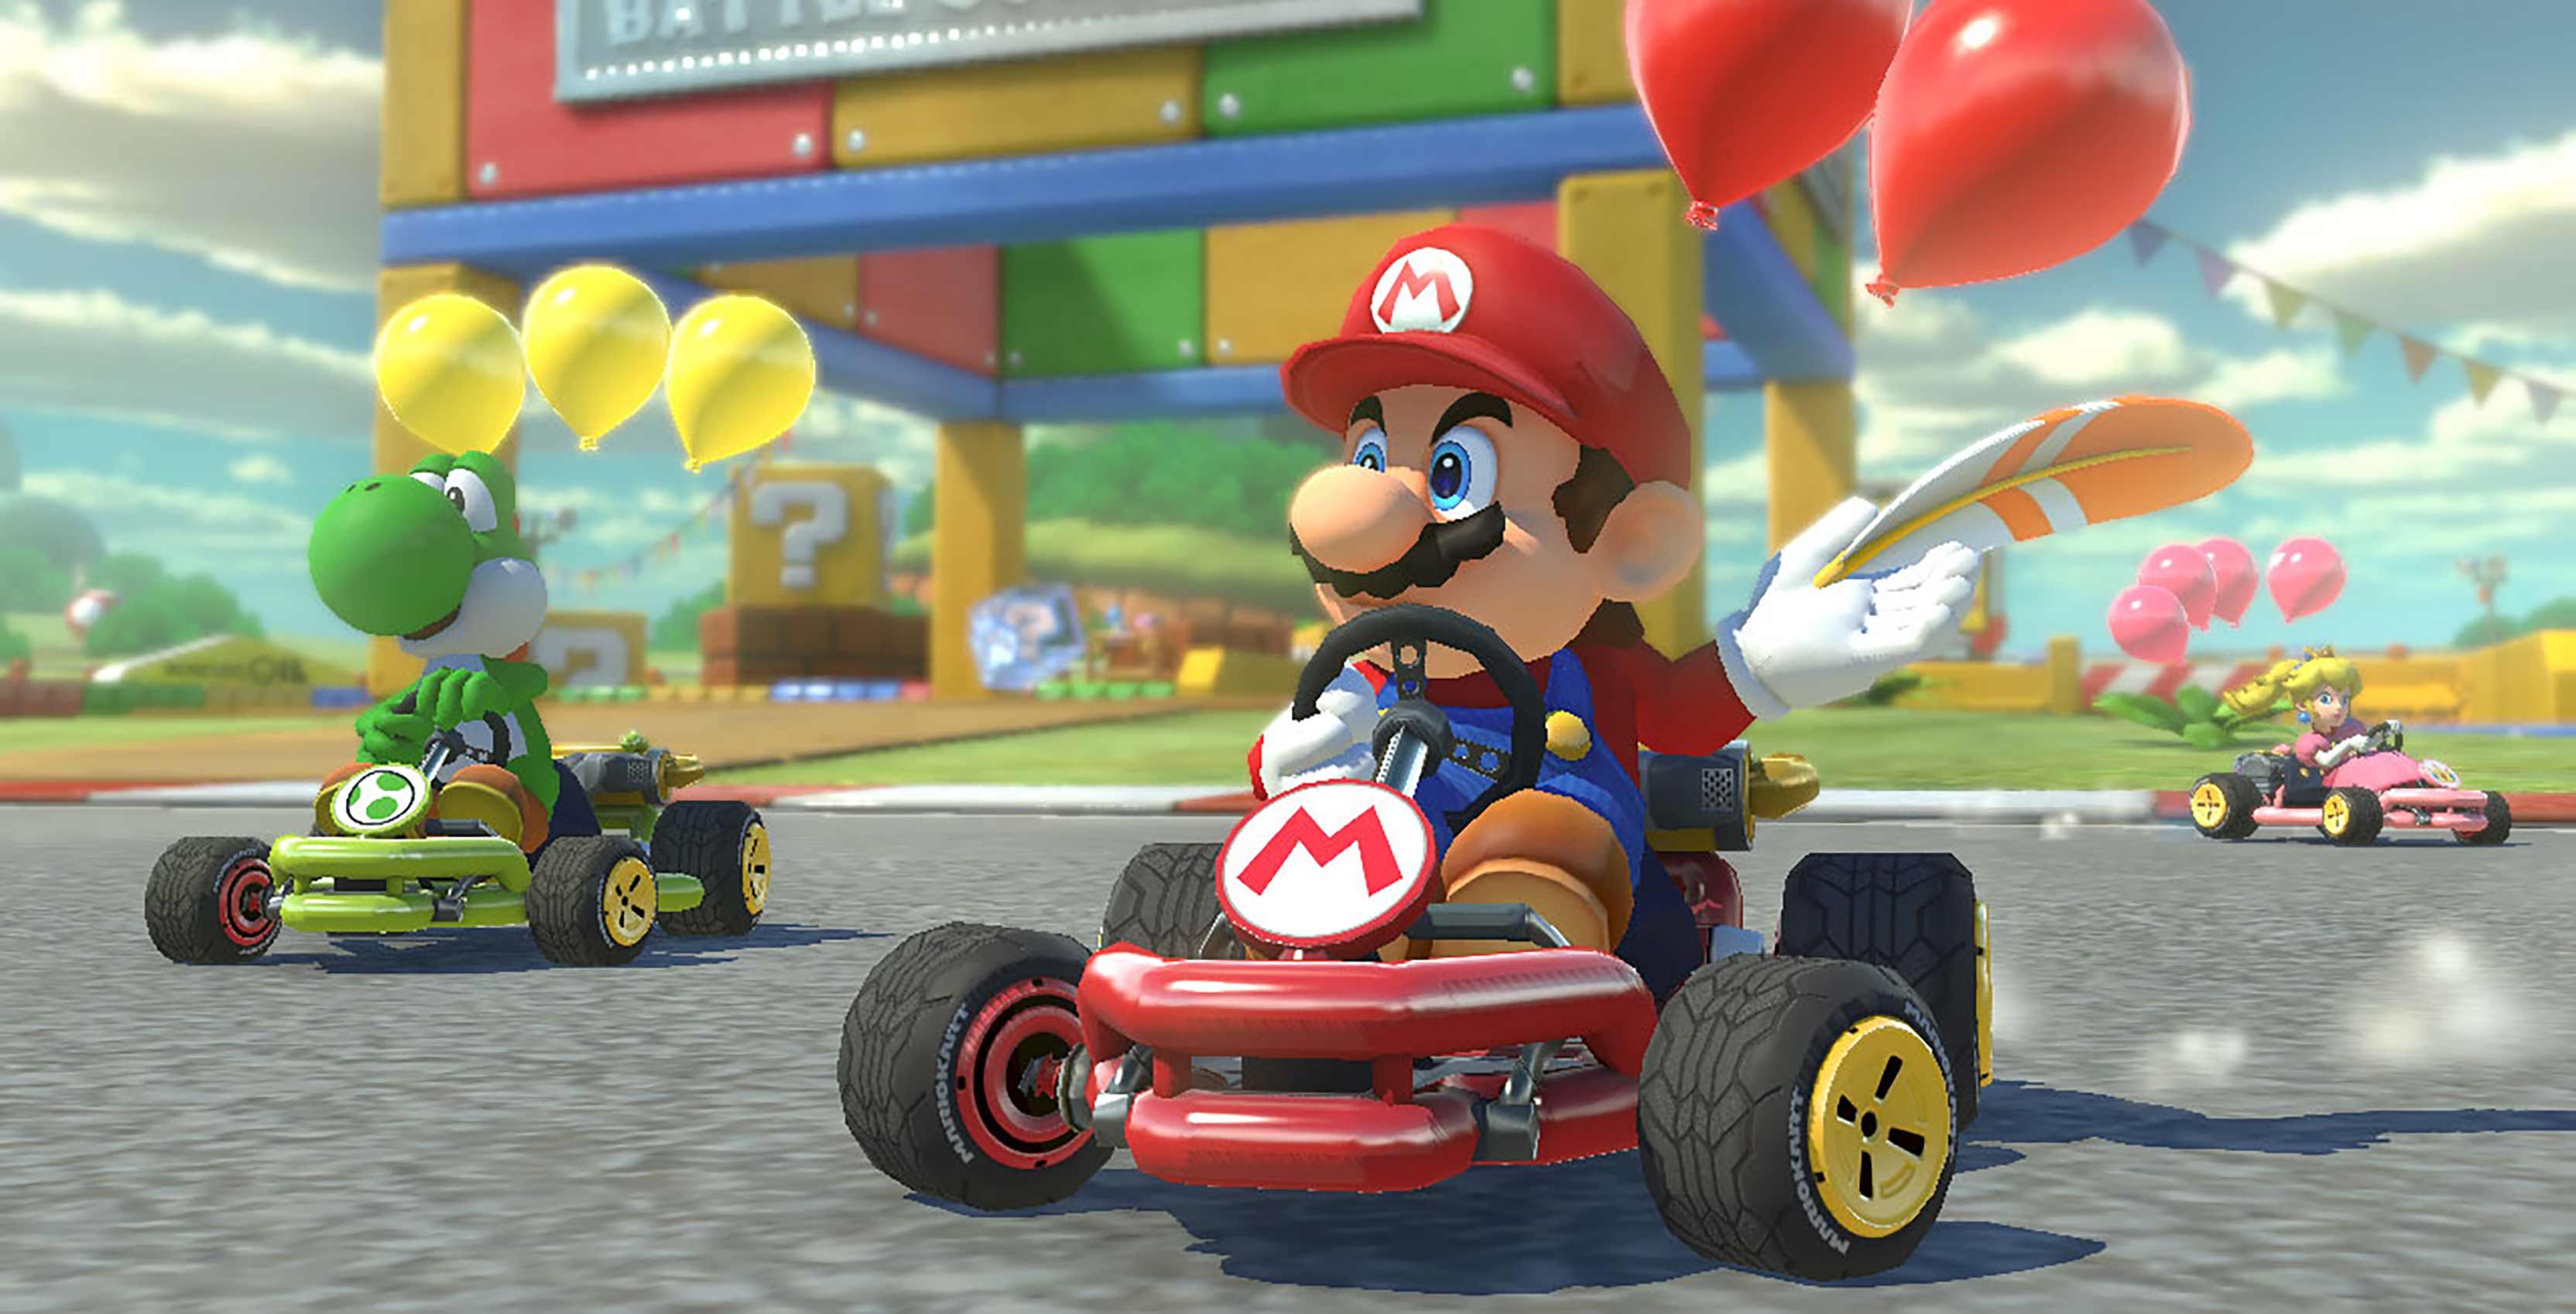 Nintendo ประกาศ Android และ iOS ได้เล่น Mario Kart แน่นอน…ในปี 2019